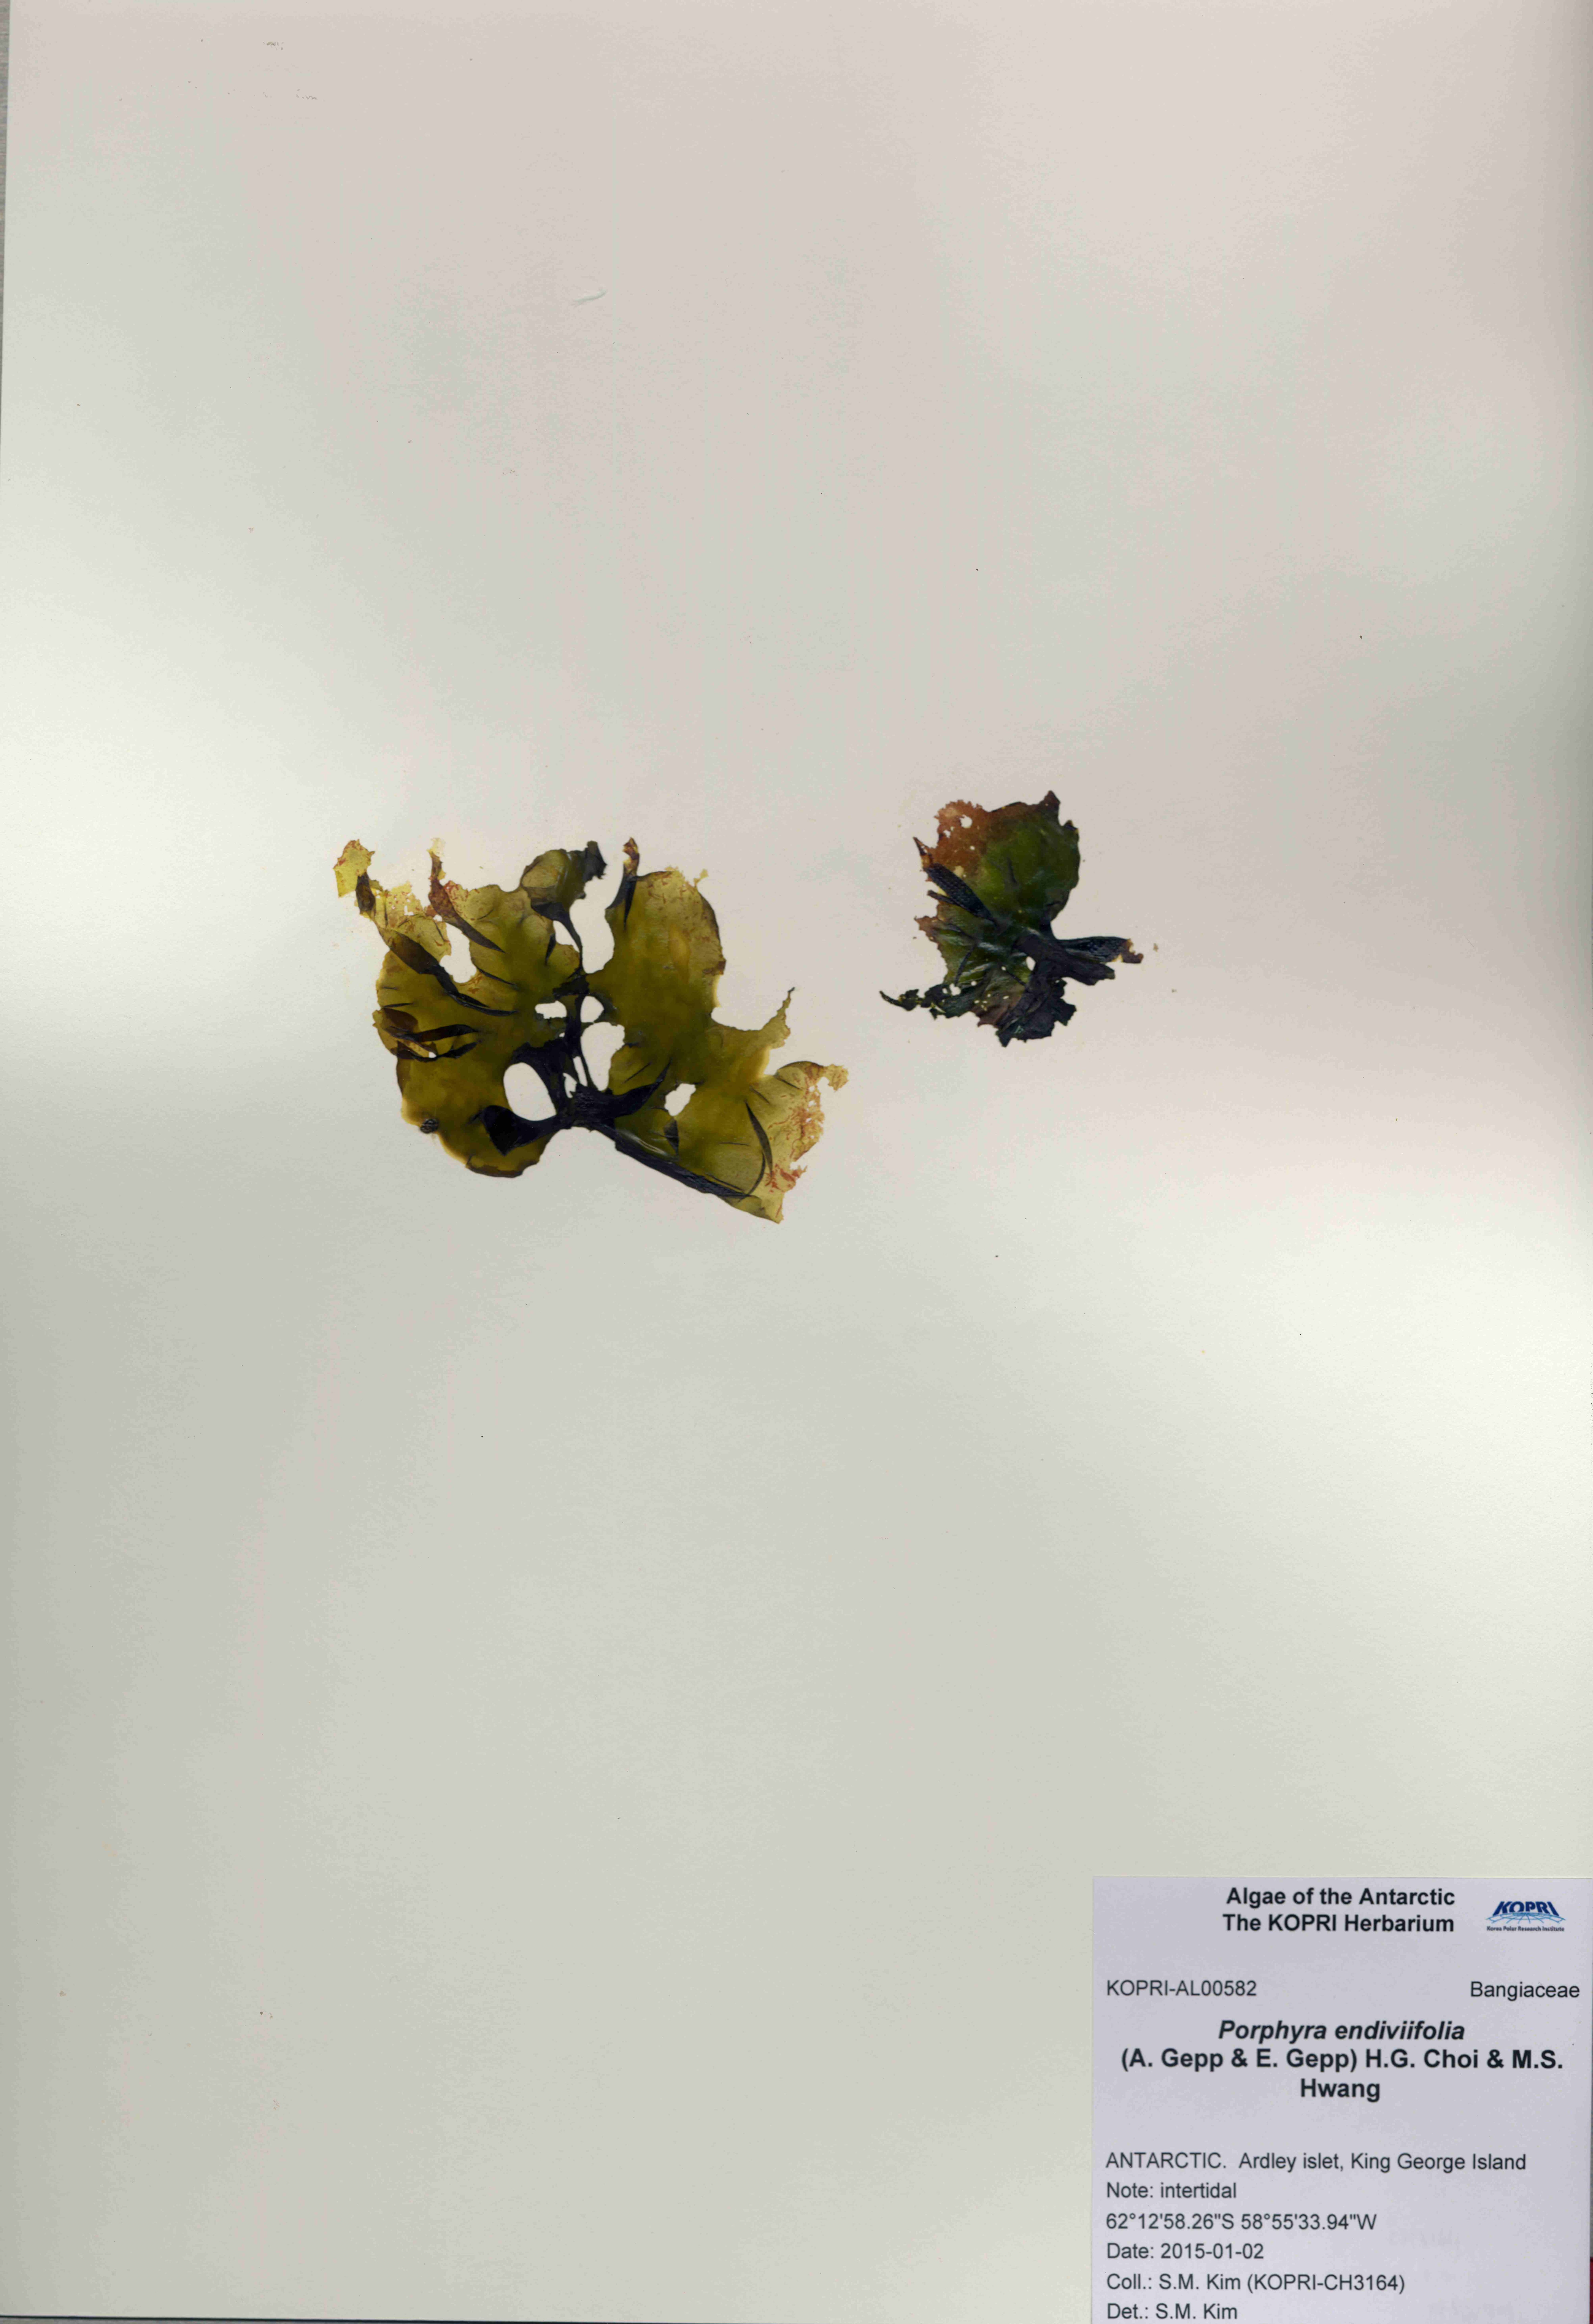 Porphyra endiviifolia (A. Gepp & E. Gepp) H.G. Choi & M.S. Hwang